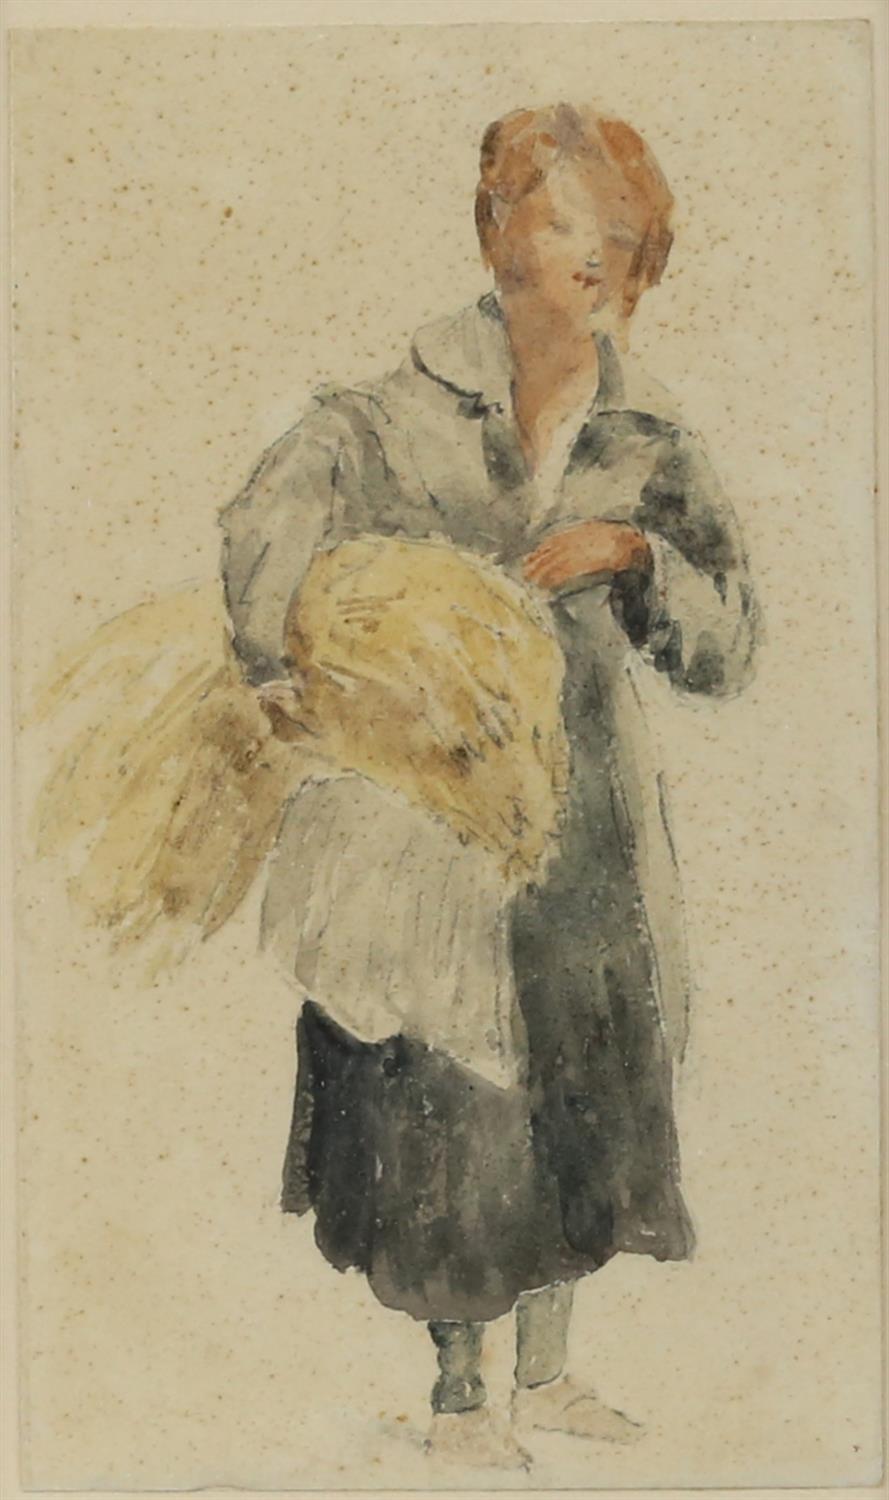 19th century English School, young woman carrying a sheath of corn, watercolour, 17.5cm x 10cm,